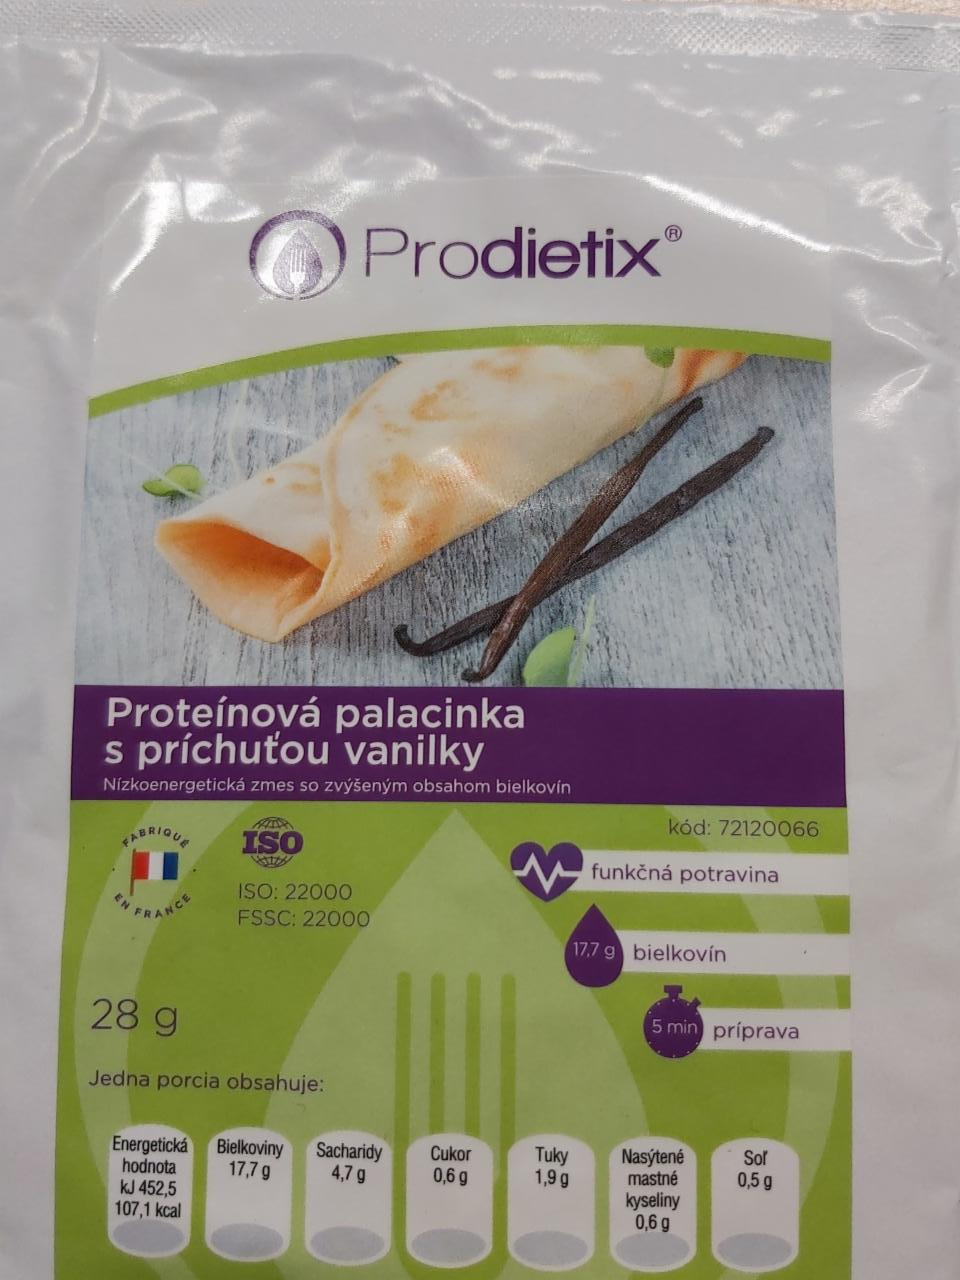 Fotografie - Proteínová palacinka s príchuťou vanilky Prodietix